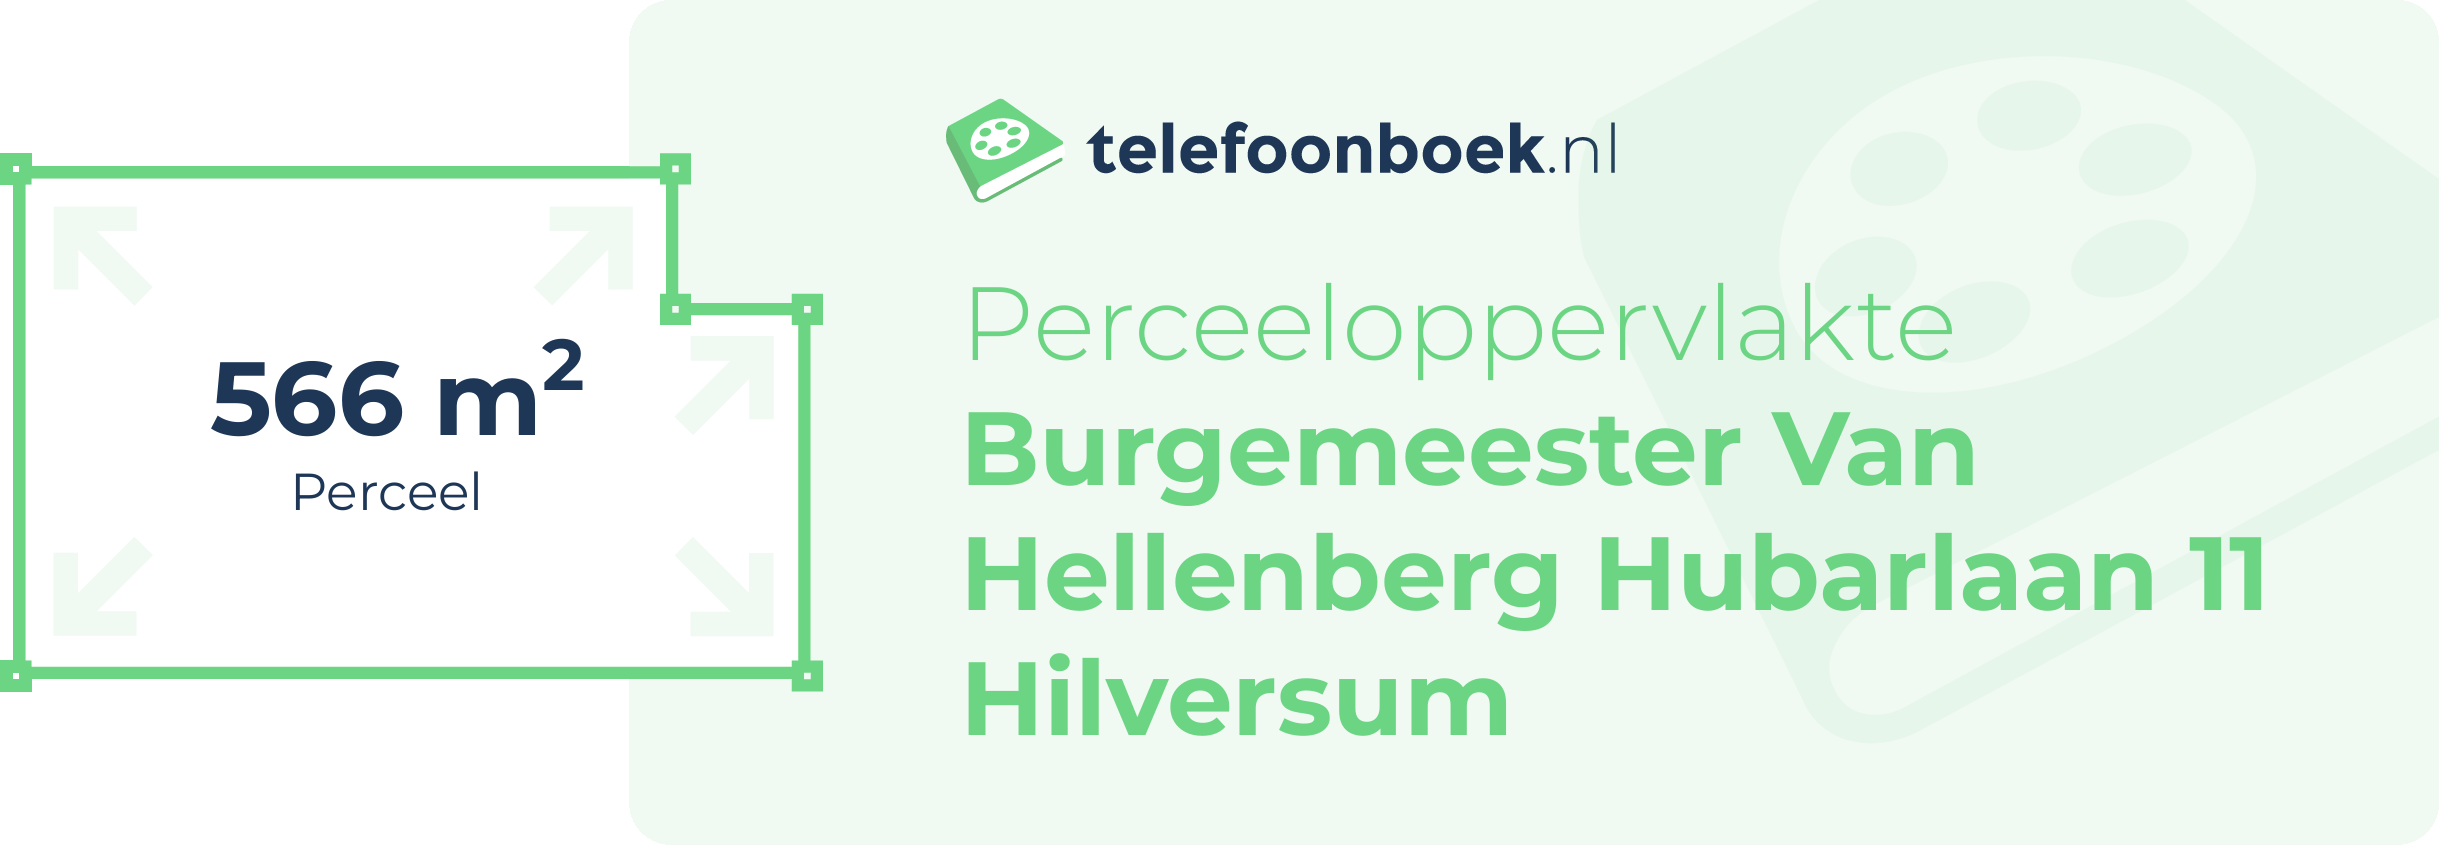 Perceeloppervlakte Burgemeester Van Hellenberg Hubarlaan 11 Hilversum